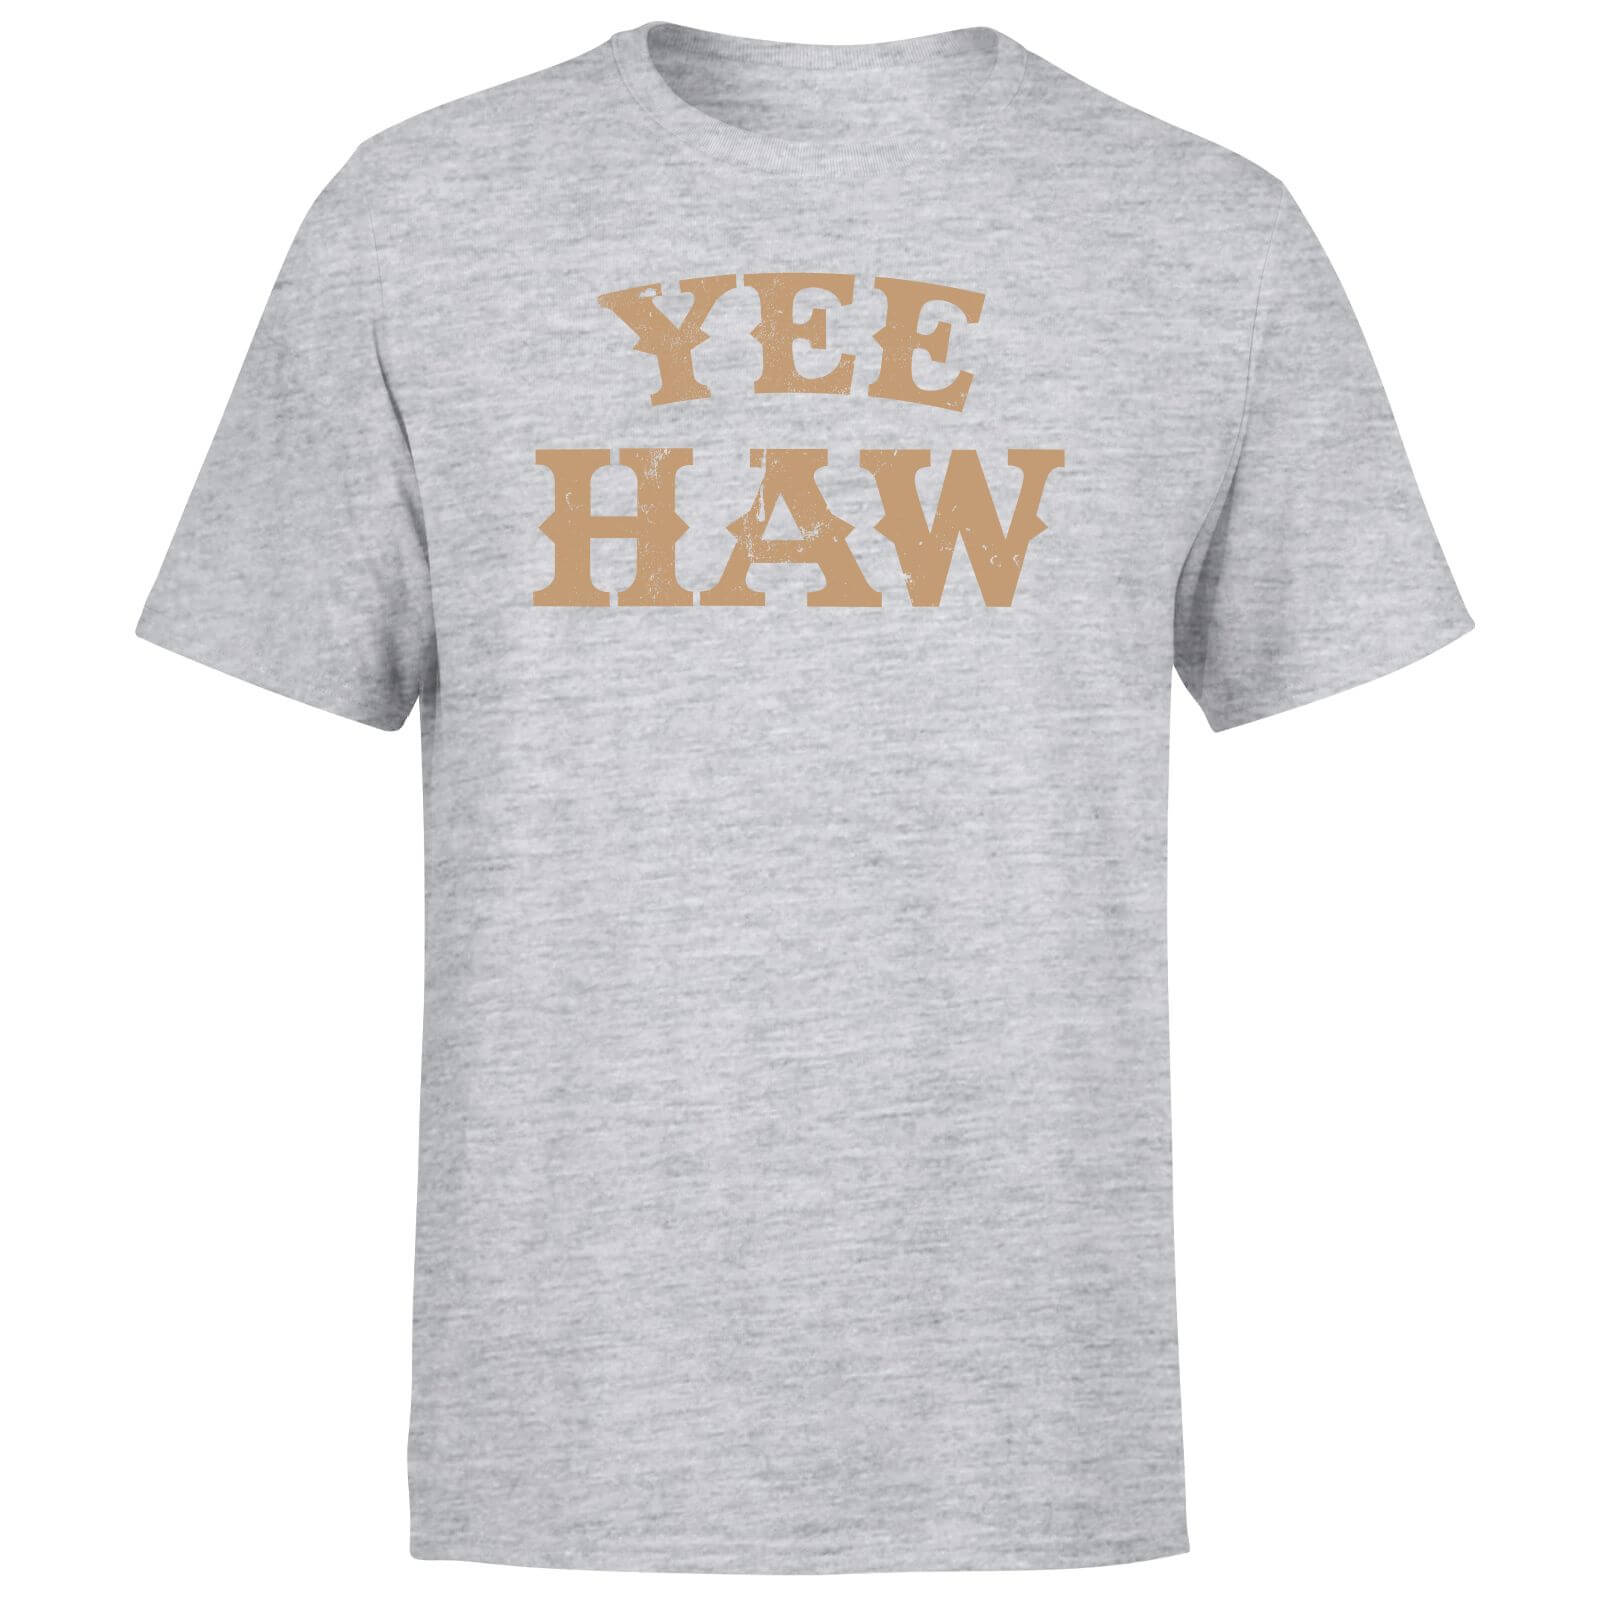 Yee Haw Men's T-Shirt - Grey - XS - Grey